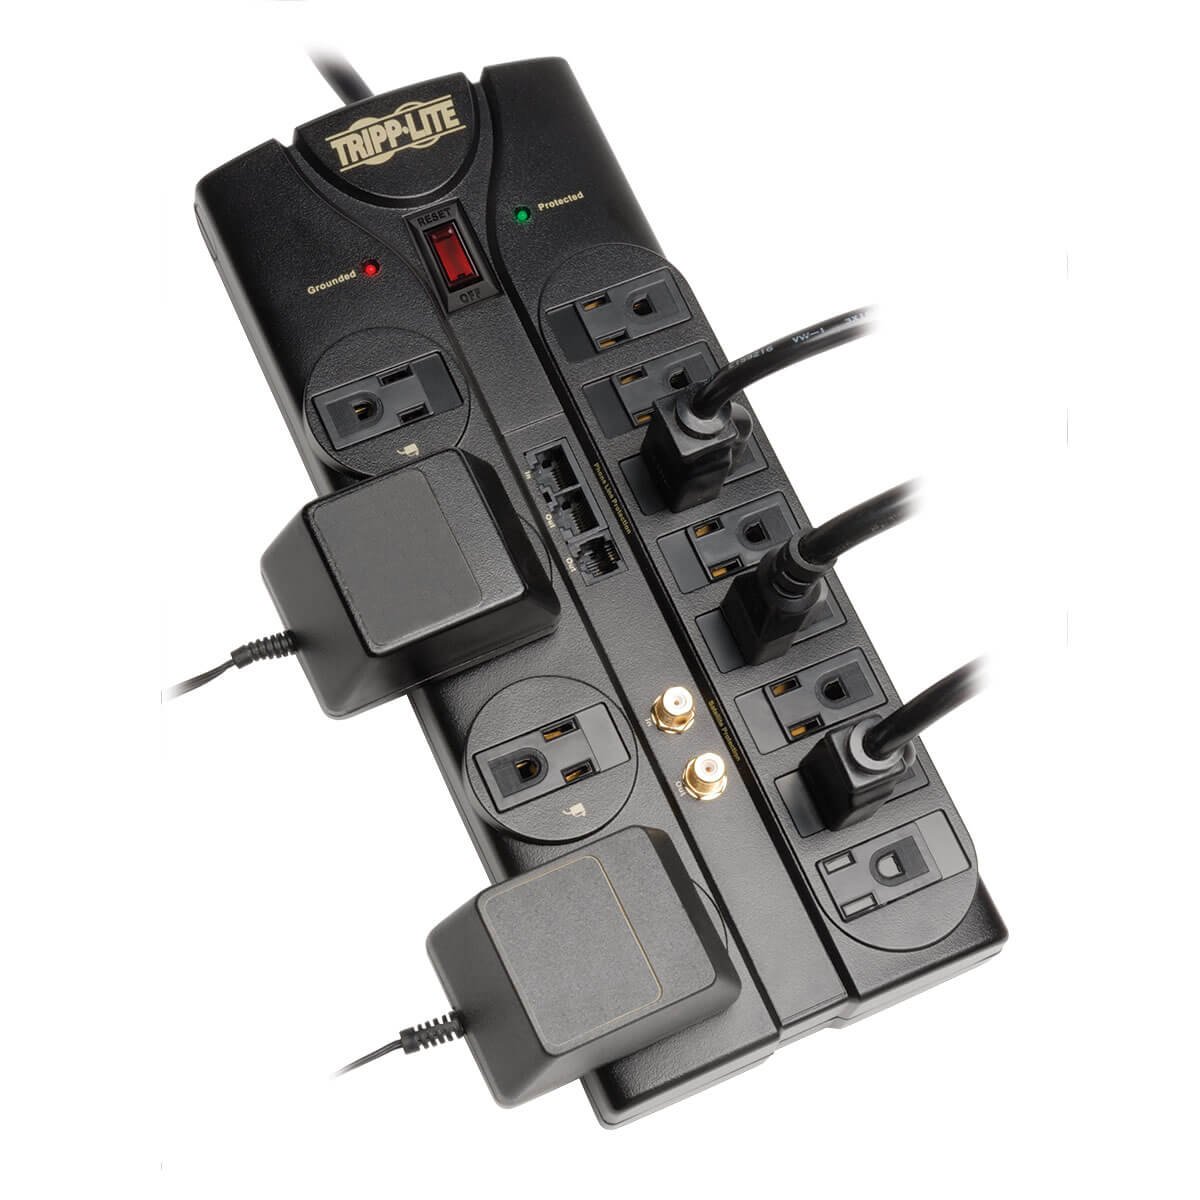 Tripp Lite 12 Outlet Surge Protector Power Strip, 8ft Cord, Right-Angle Plug, Tel/Modem/Coax/Ethernet Protection, RJ11, RJ45, & $250,000 INSURANCE (TLP1208SAT) Black